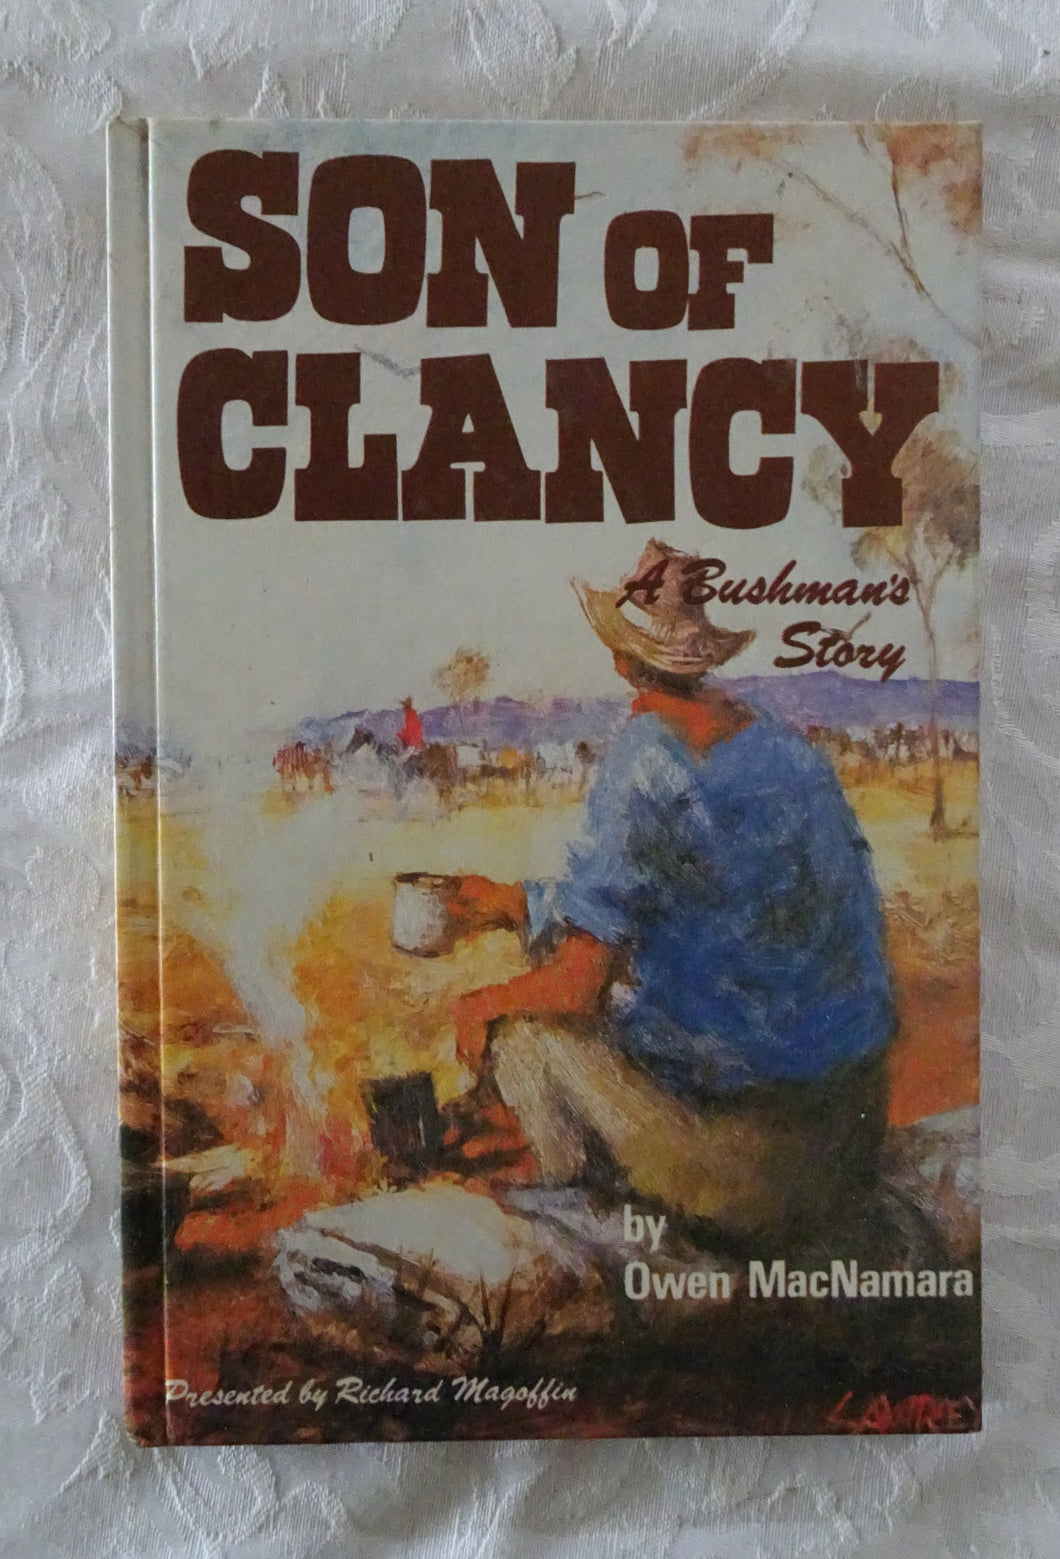 Son of Clancy: A Bushman's Story  by Owen Roe MacNamara, presented by Richard Magoffin